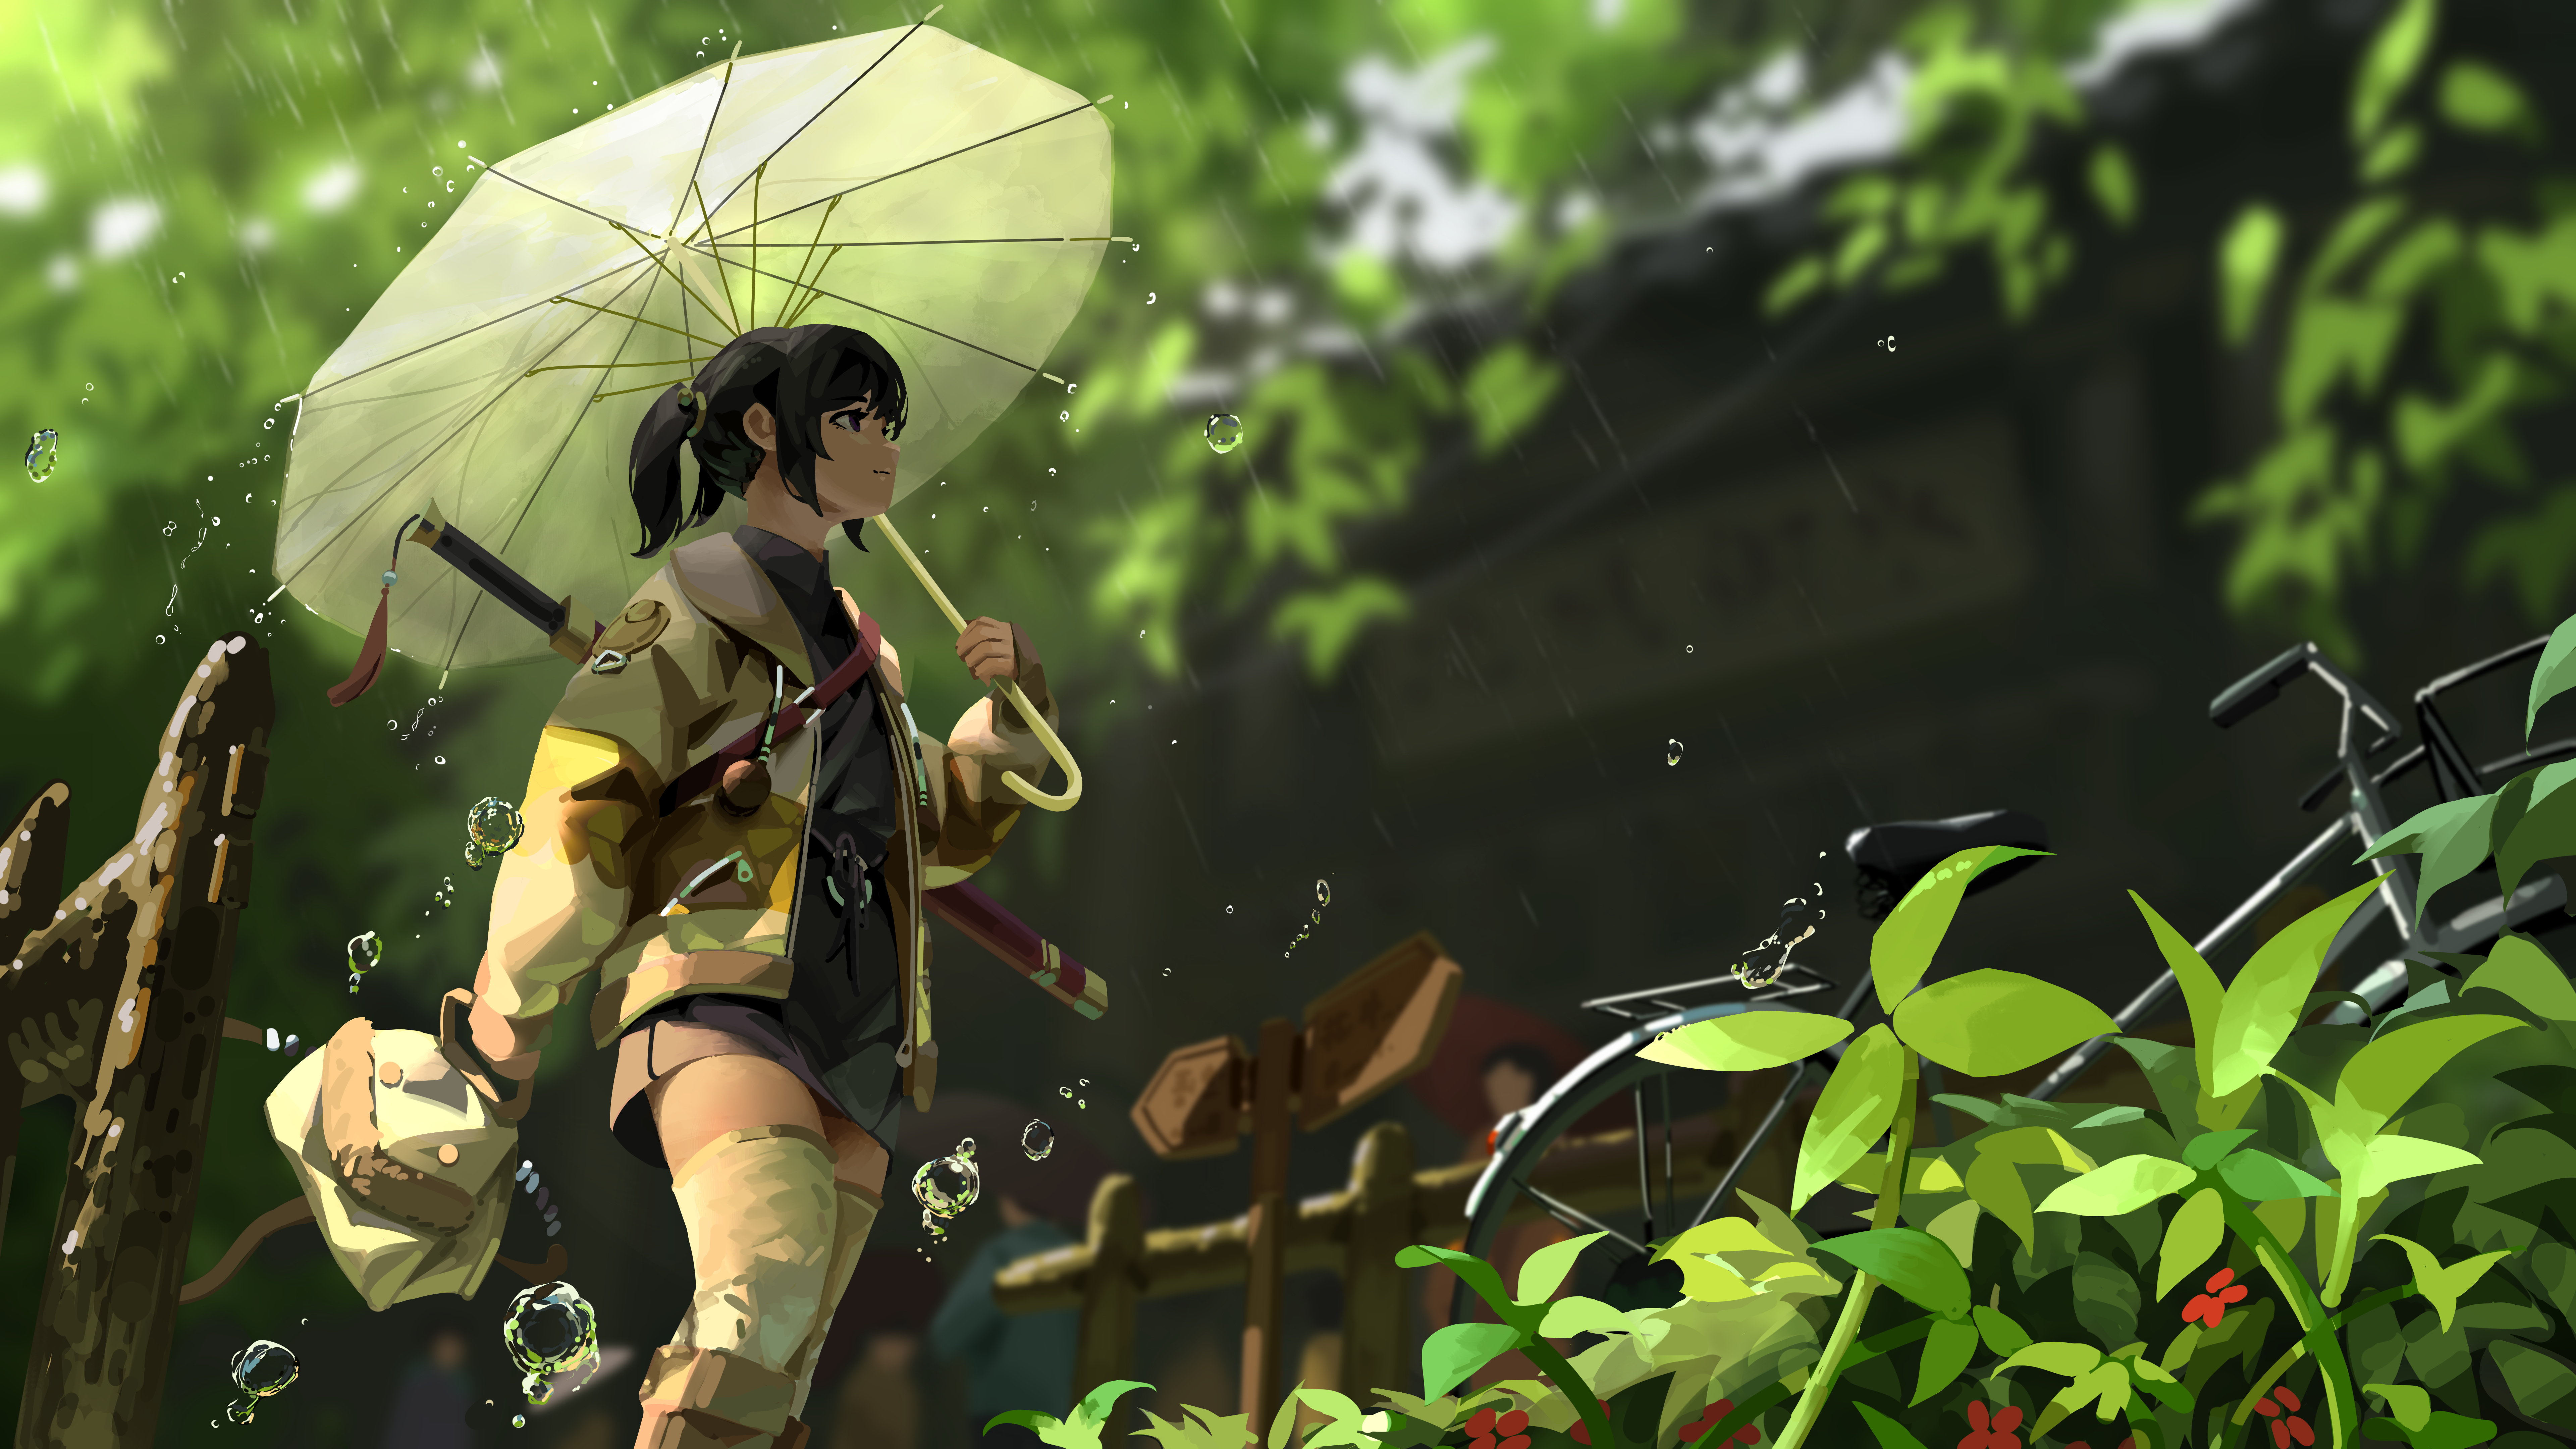 General 7680x4320 digital art artwork illustration women fantasy art fantasy girl umbrella rain plants nature Kan Liu